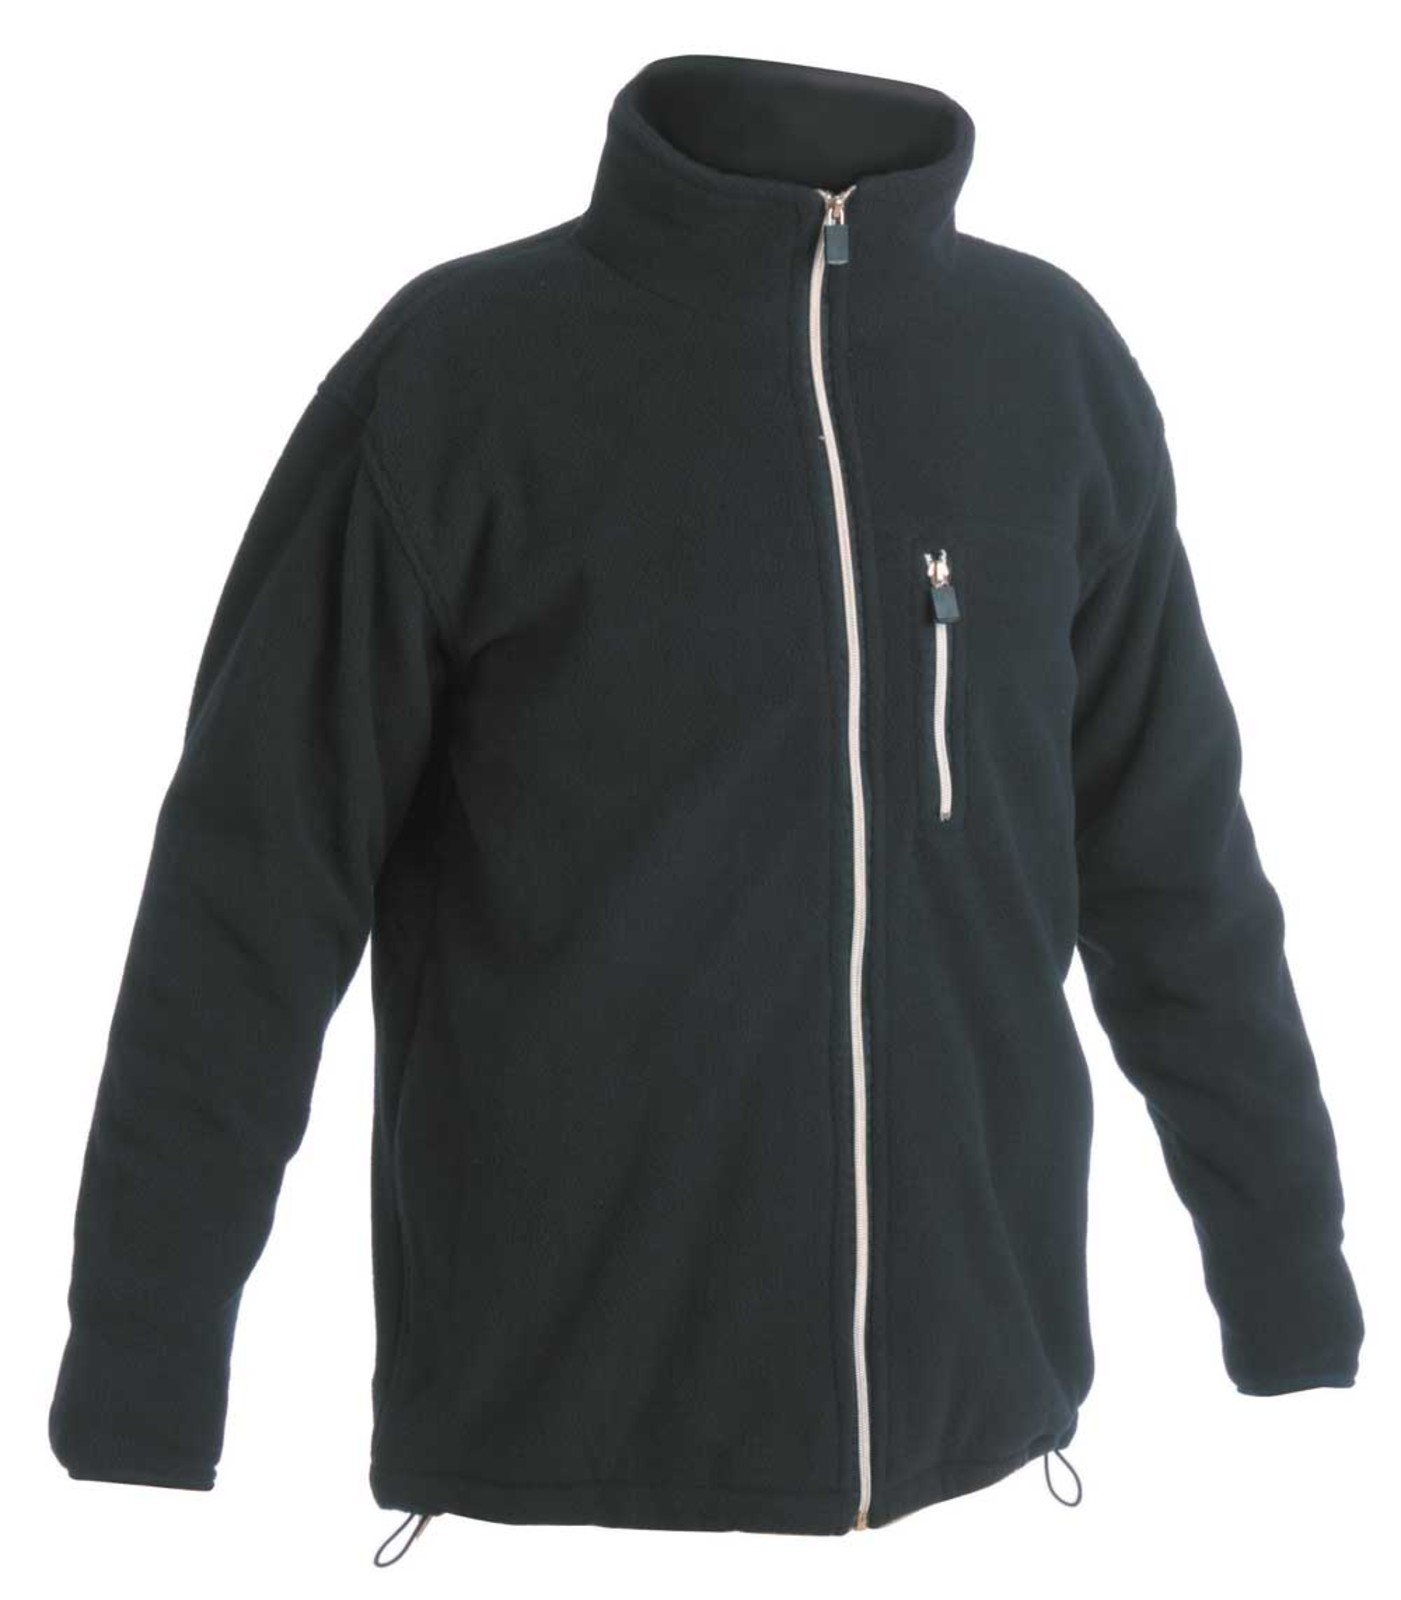 Fleece bunda Karela - veľkosť: S, farba: navy